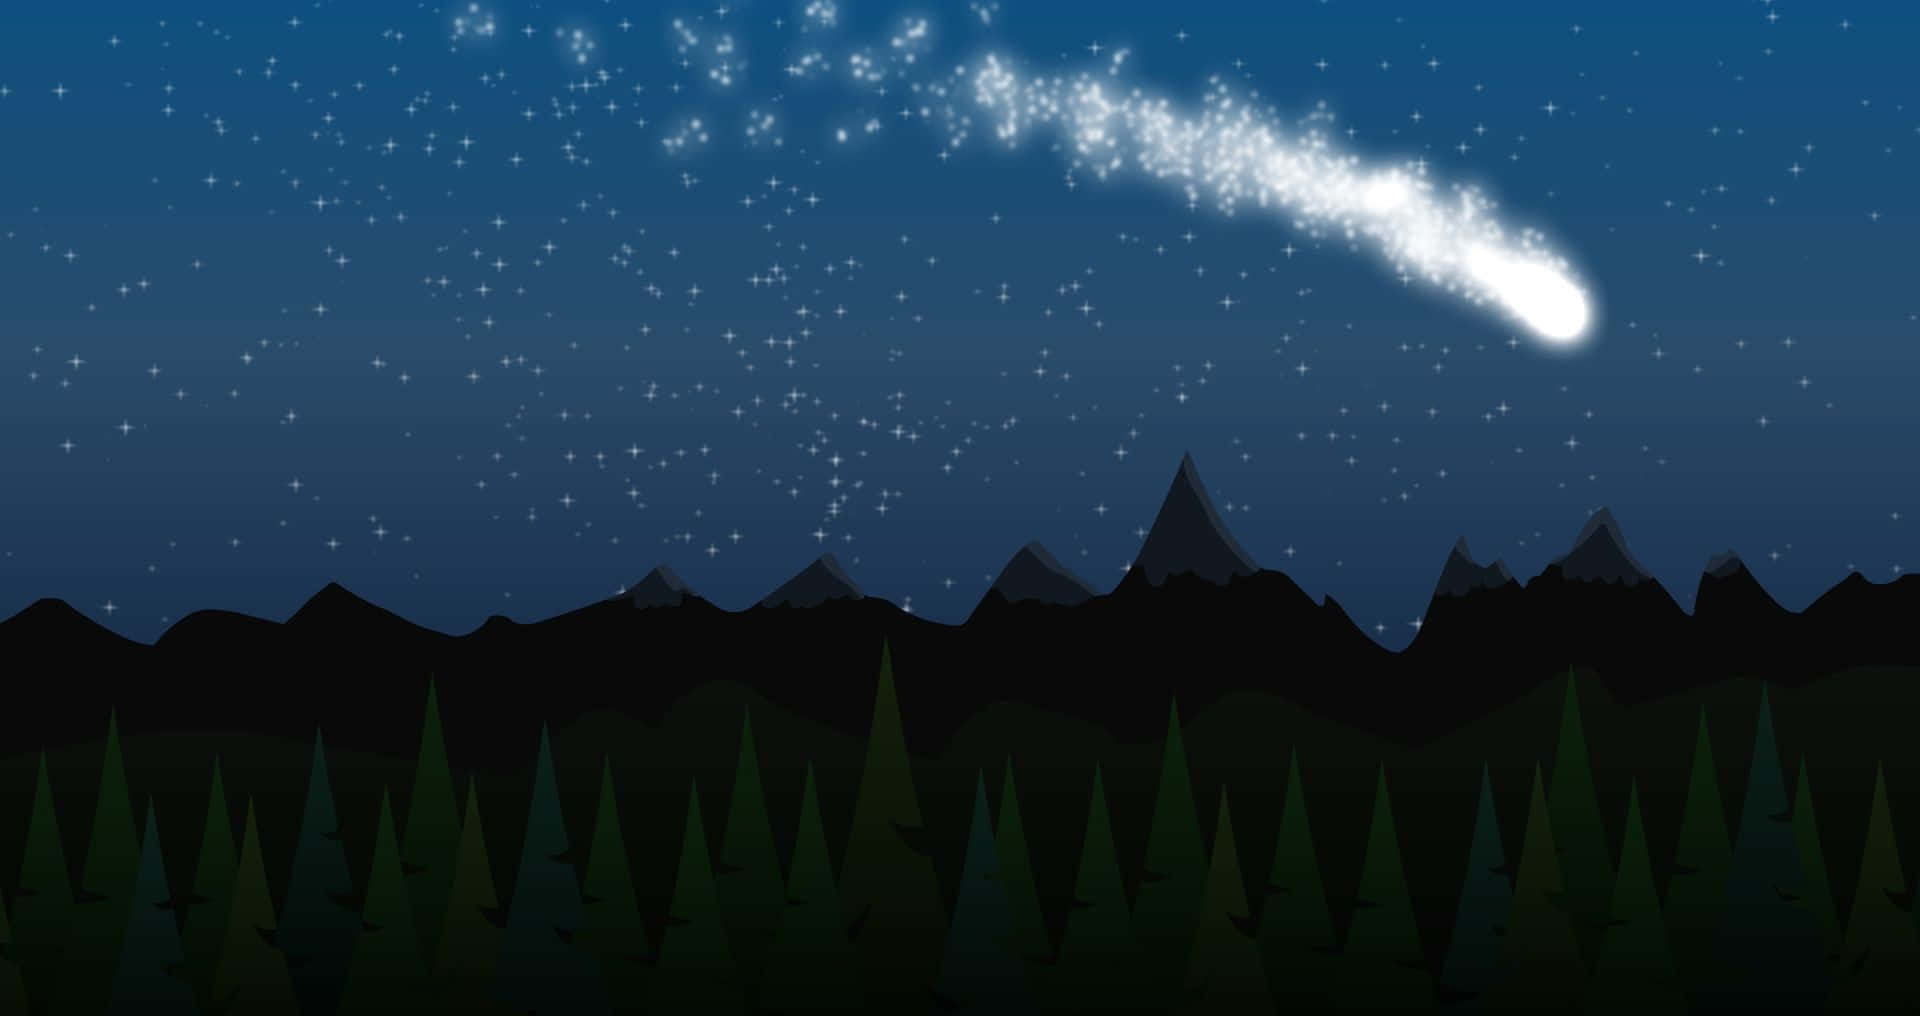 Stunning Comet Illuminating the Night Sky Wallpaper